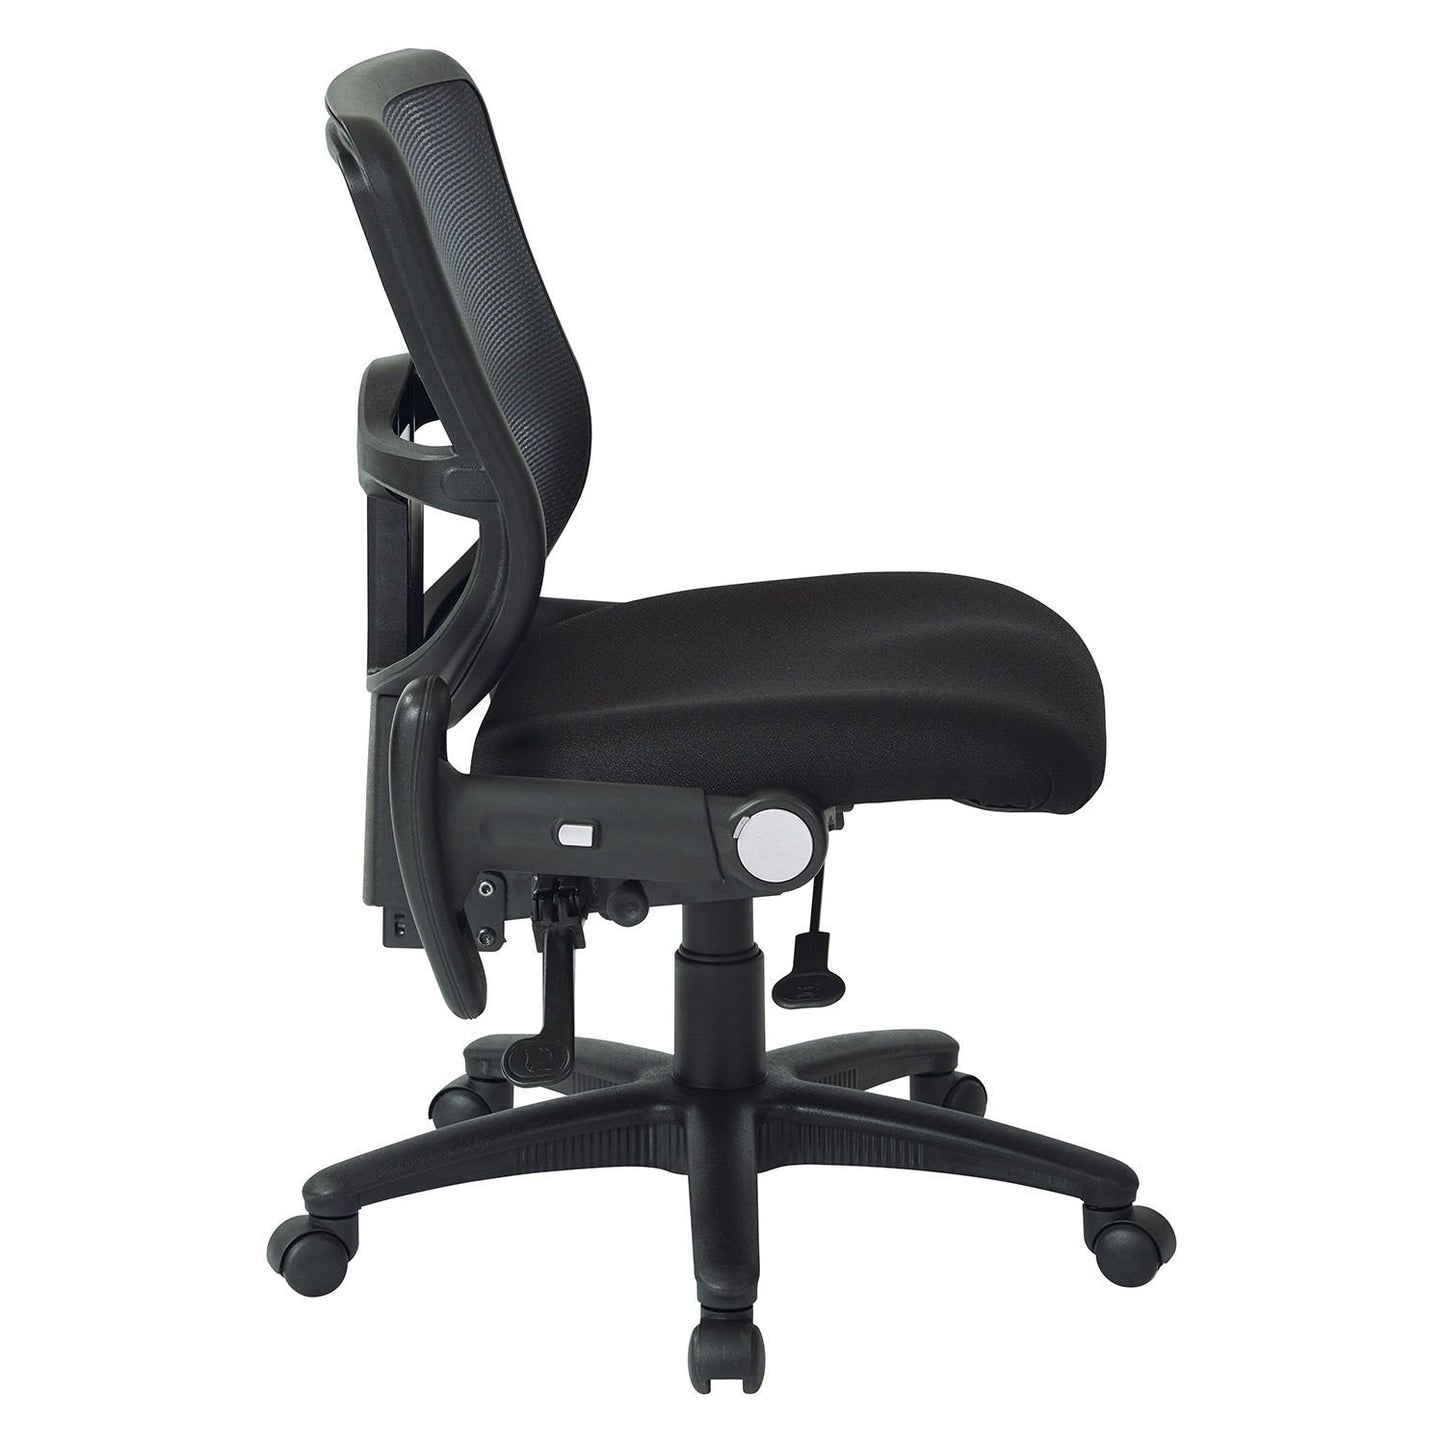 WorkSmart Multi-Function Office Chair, Black